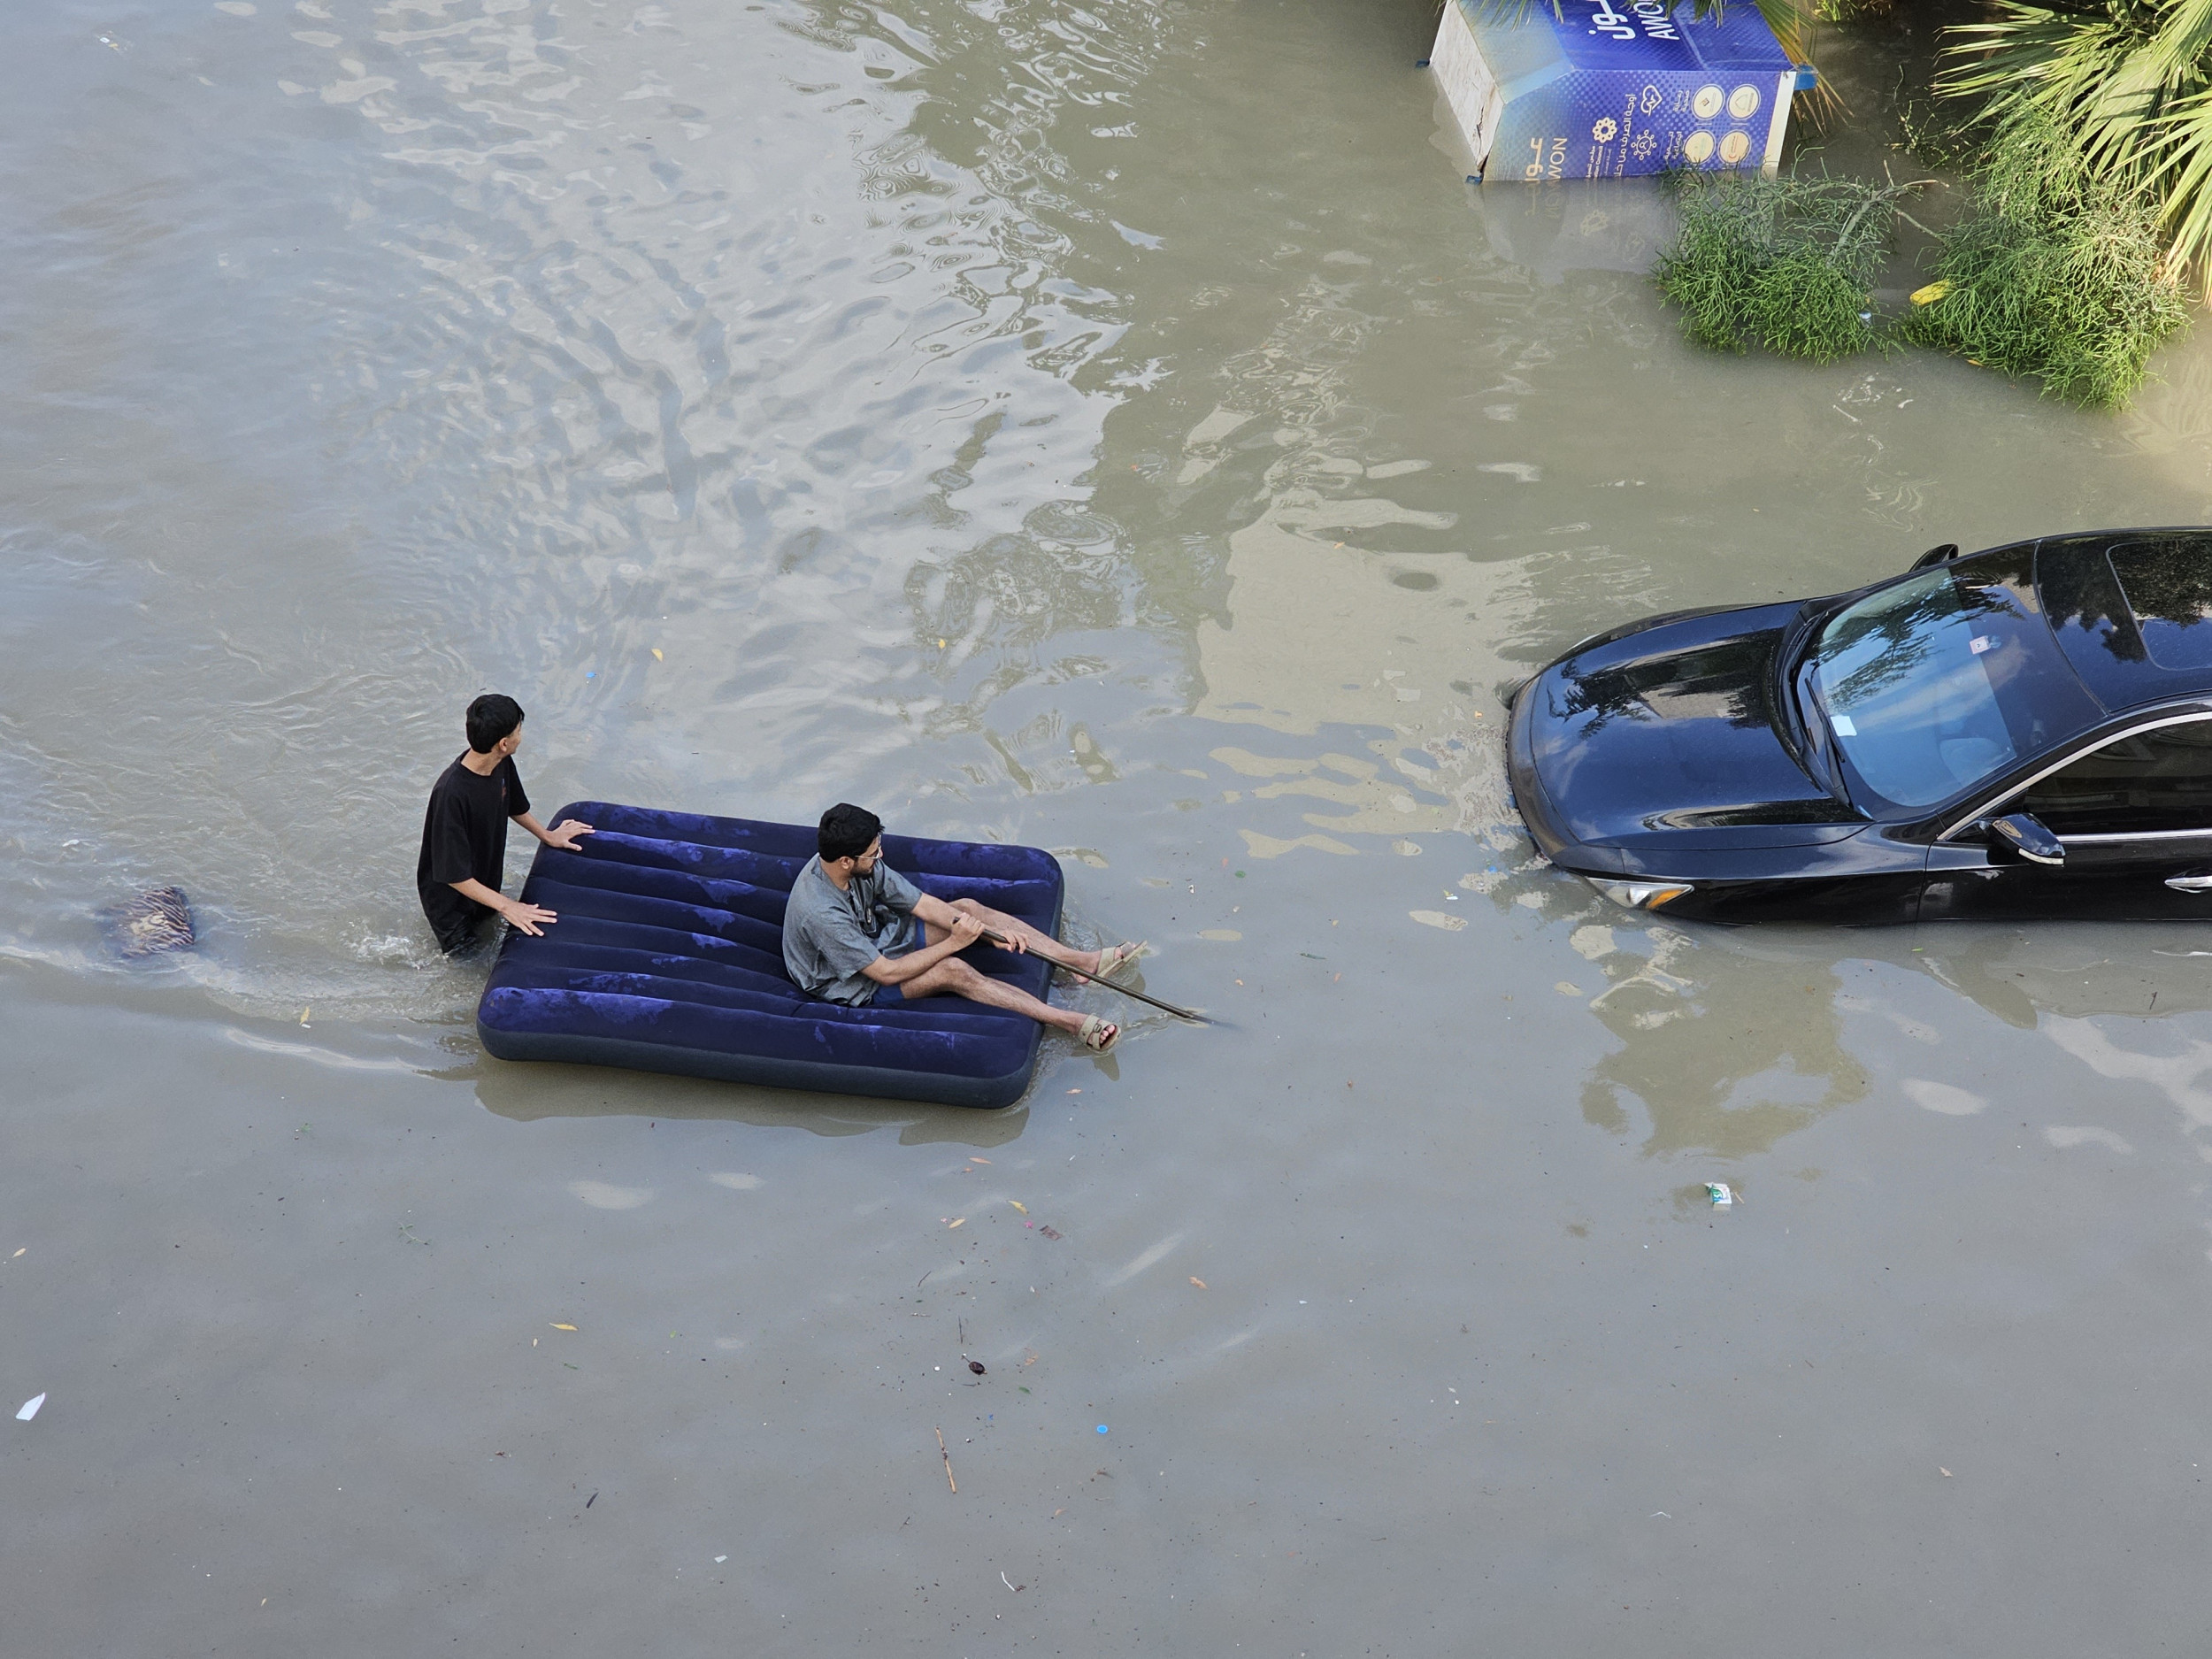 Photos Show Huge Flood as Dubai Drowns in Year's Rain, Thousands of Cars Submerged